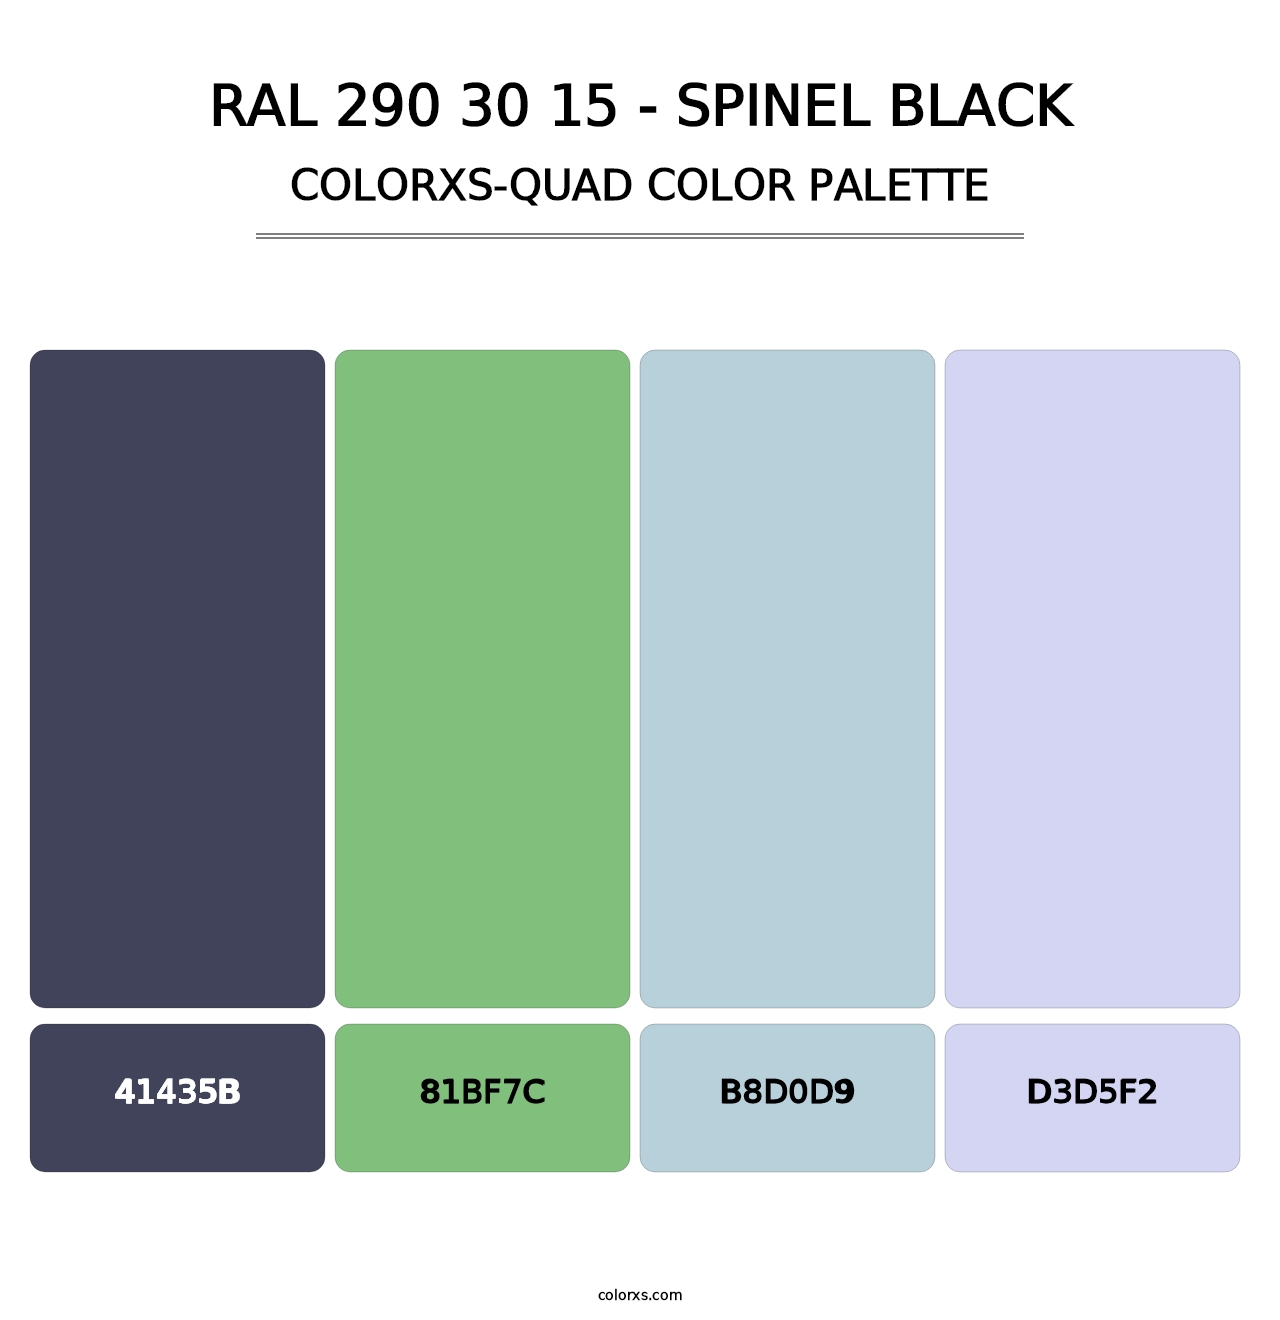 RAL 290 30 15 - Spinel Black - Colorxs Quad Palette